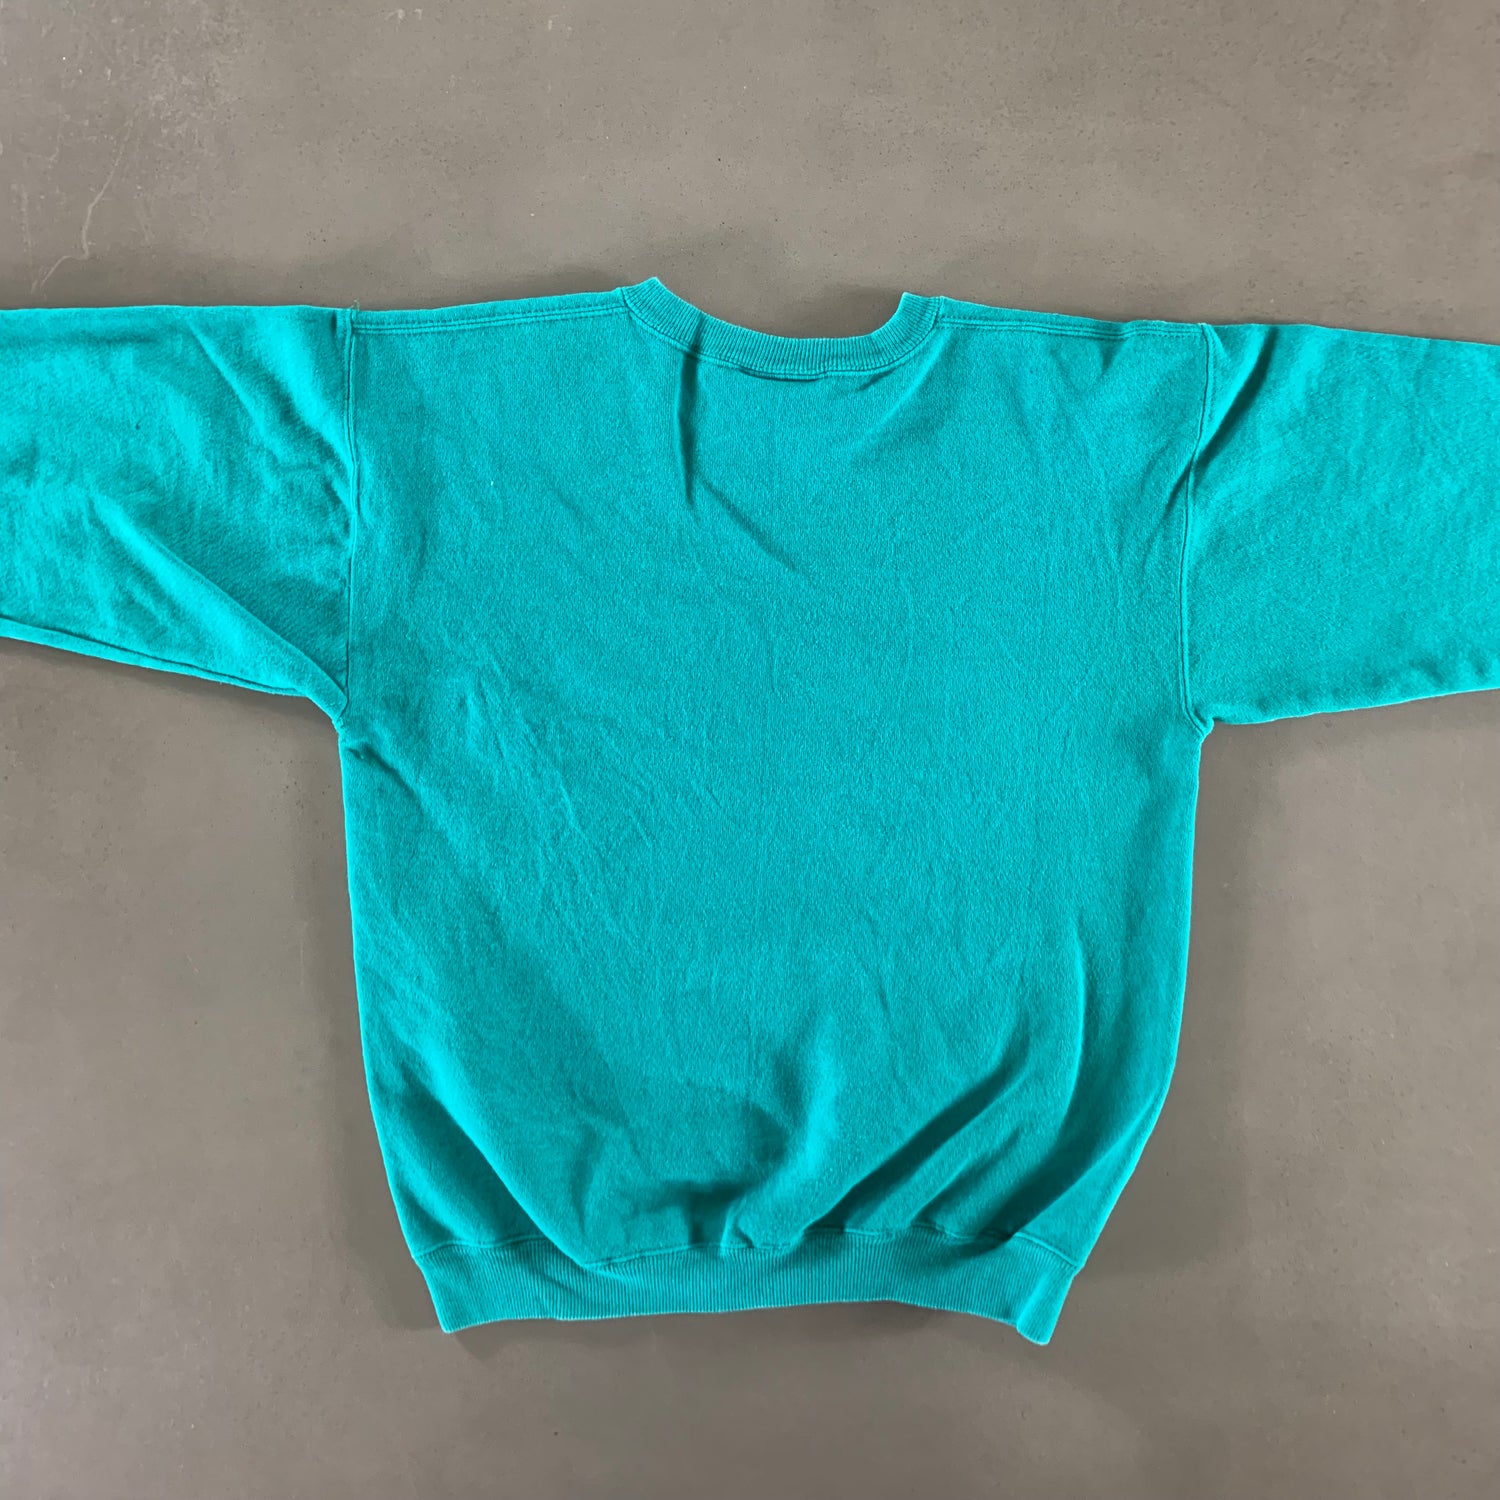 Vintage 1990s Martha's Vineyard Sweatshirt size Small